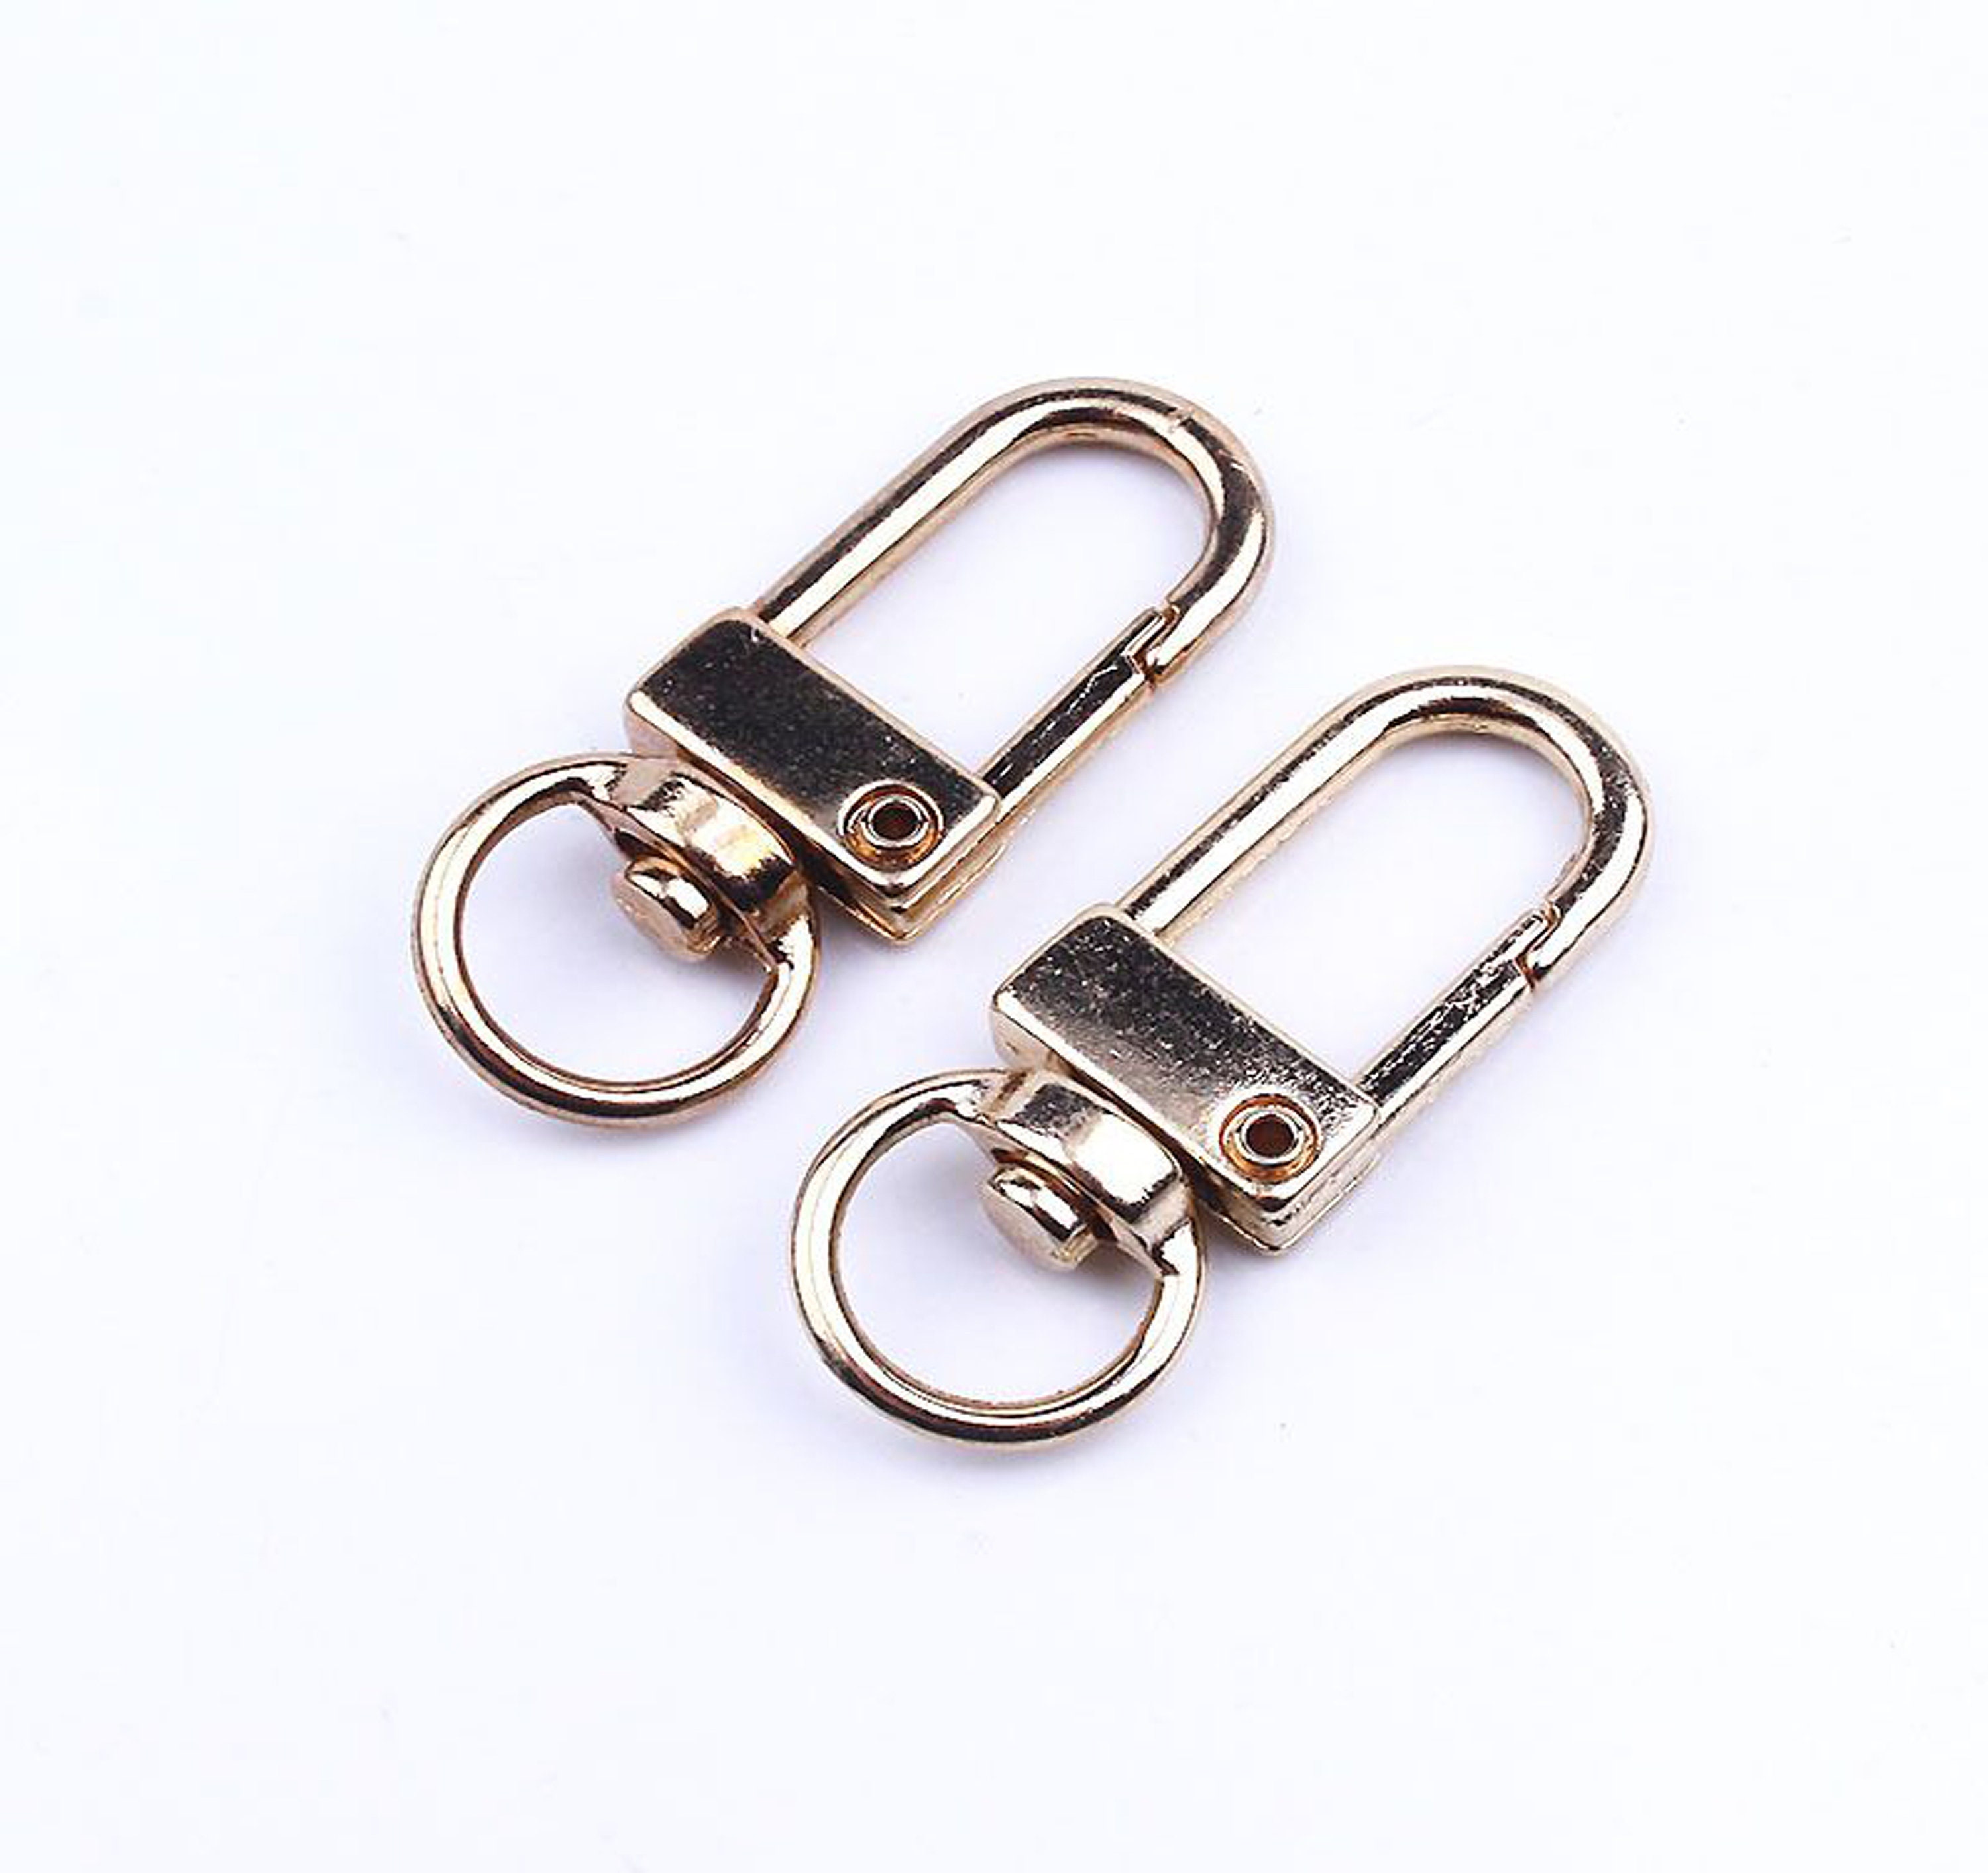  120pcs Key Chain Clip Hooks, Evatage Swivel Clasps